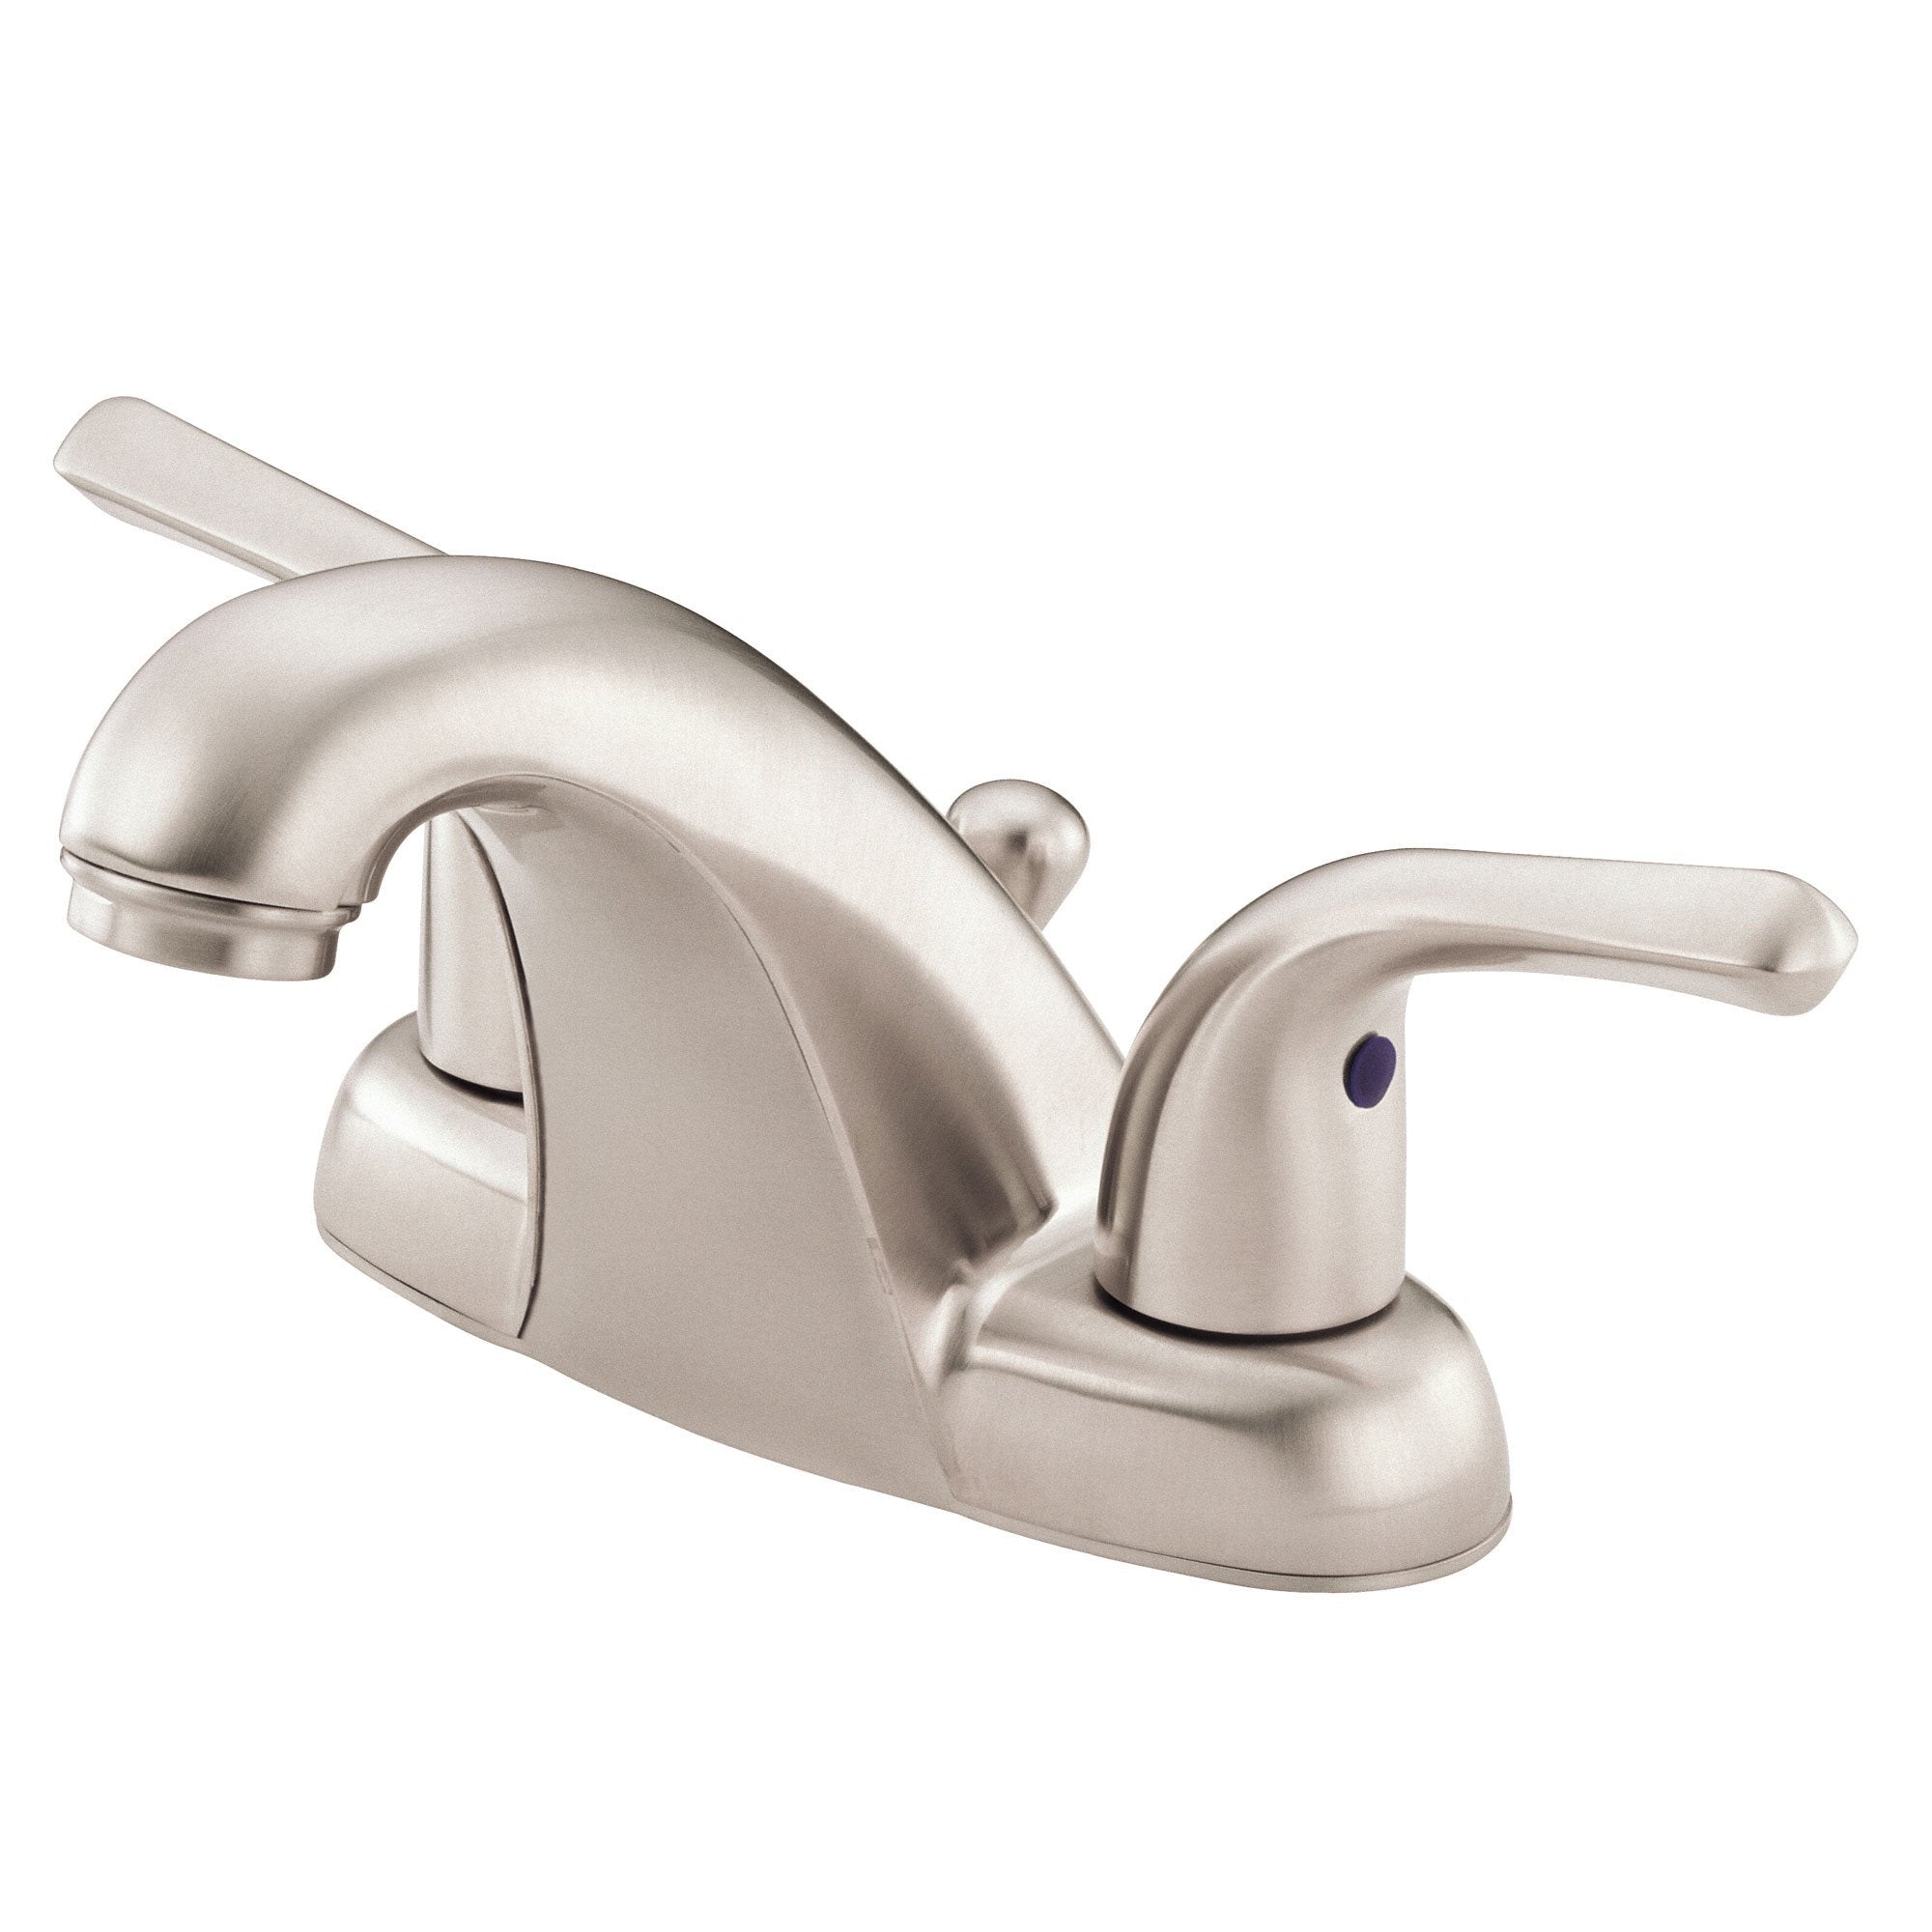 Danze Melrose Brushed Nickel Centerset Bathroom Sink Faucet with Pop-up Drain